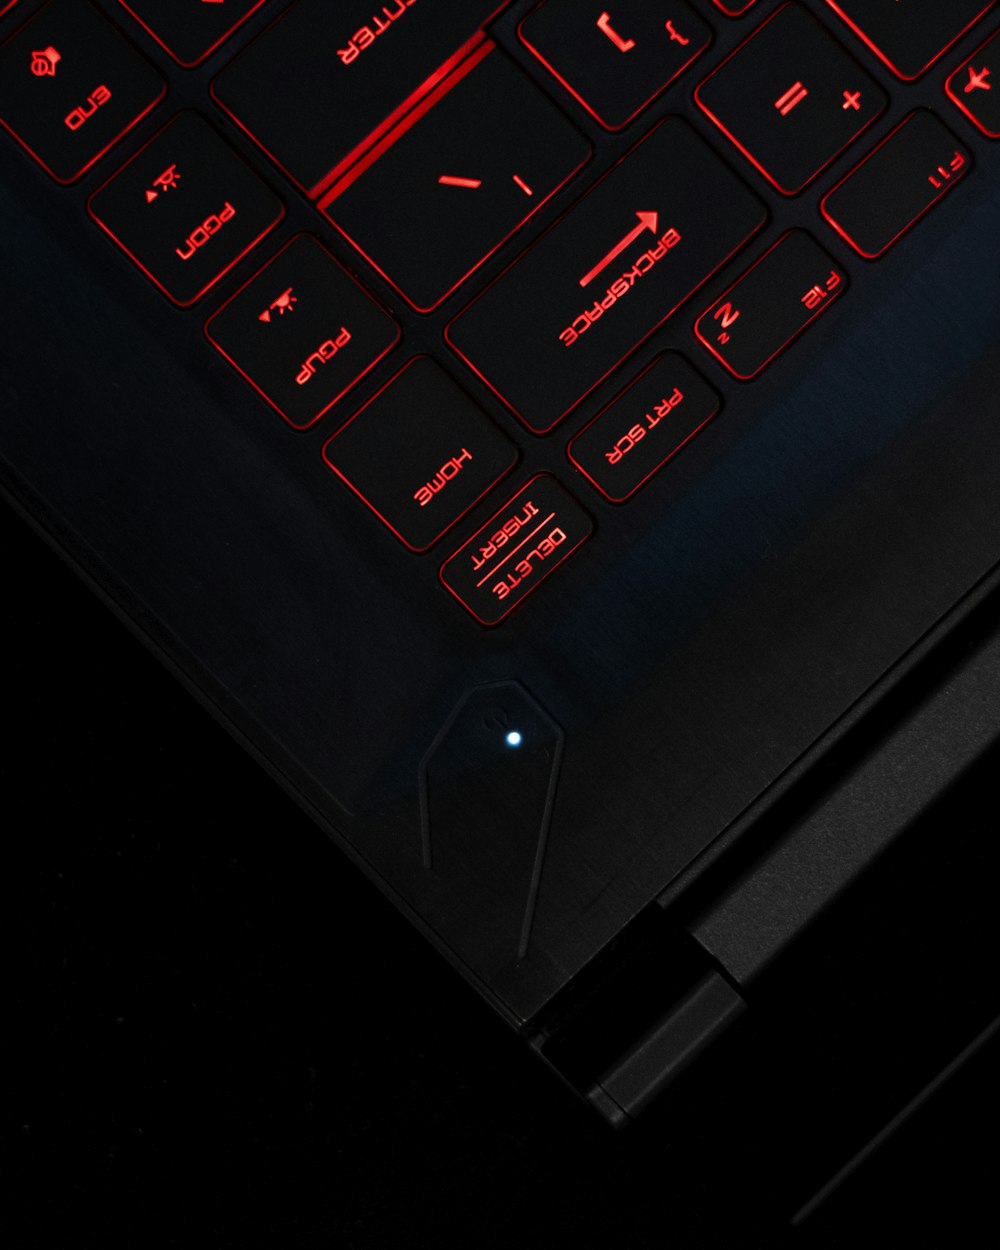 black laptop computer turned on showing keyboard